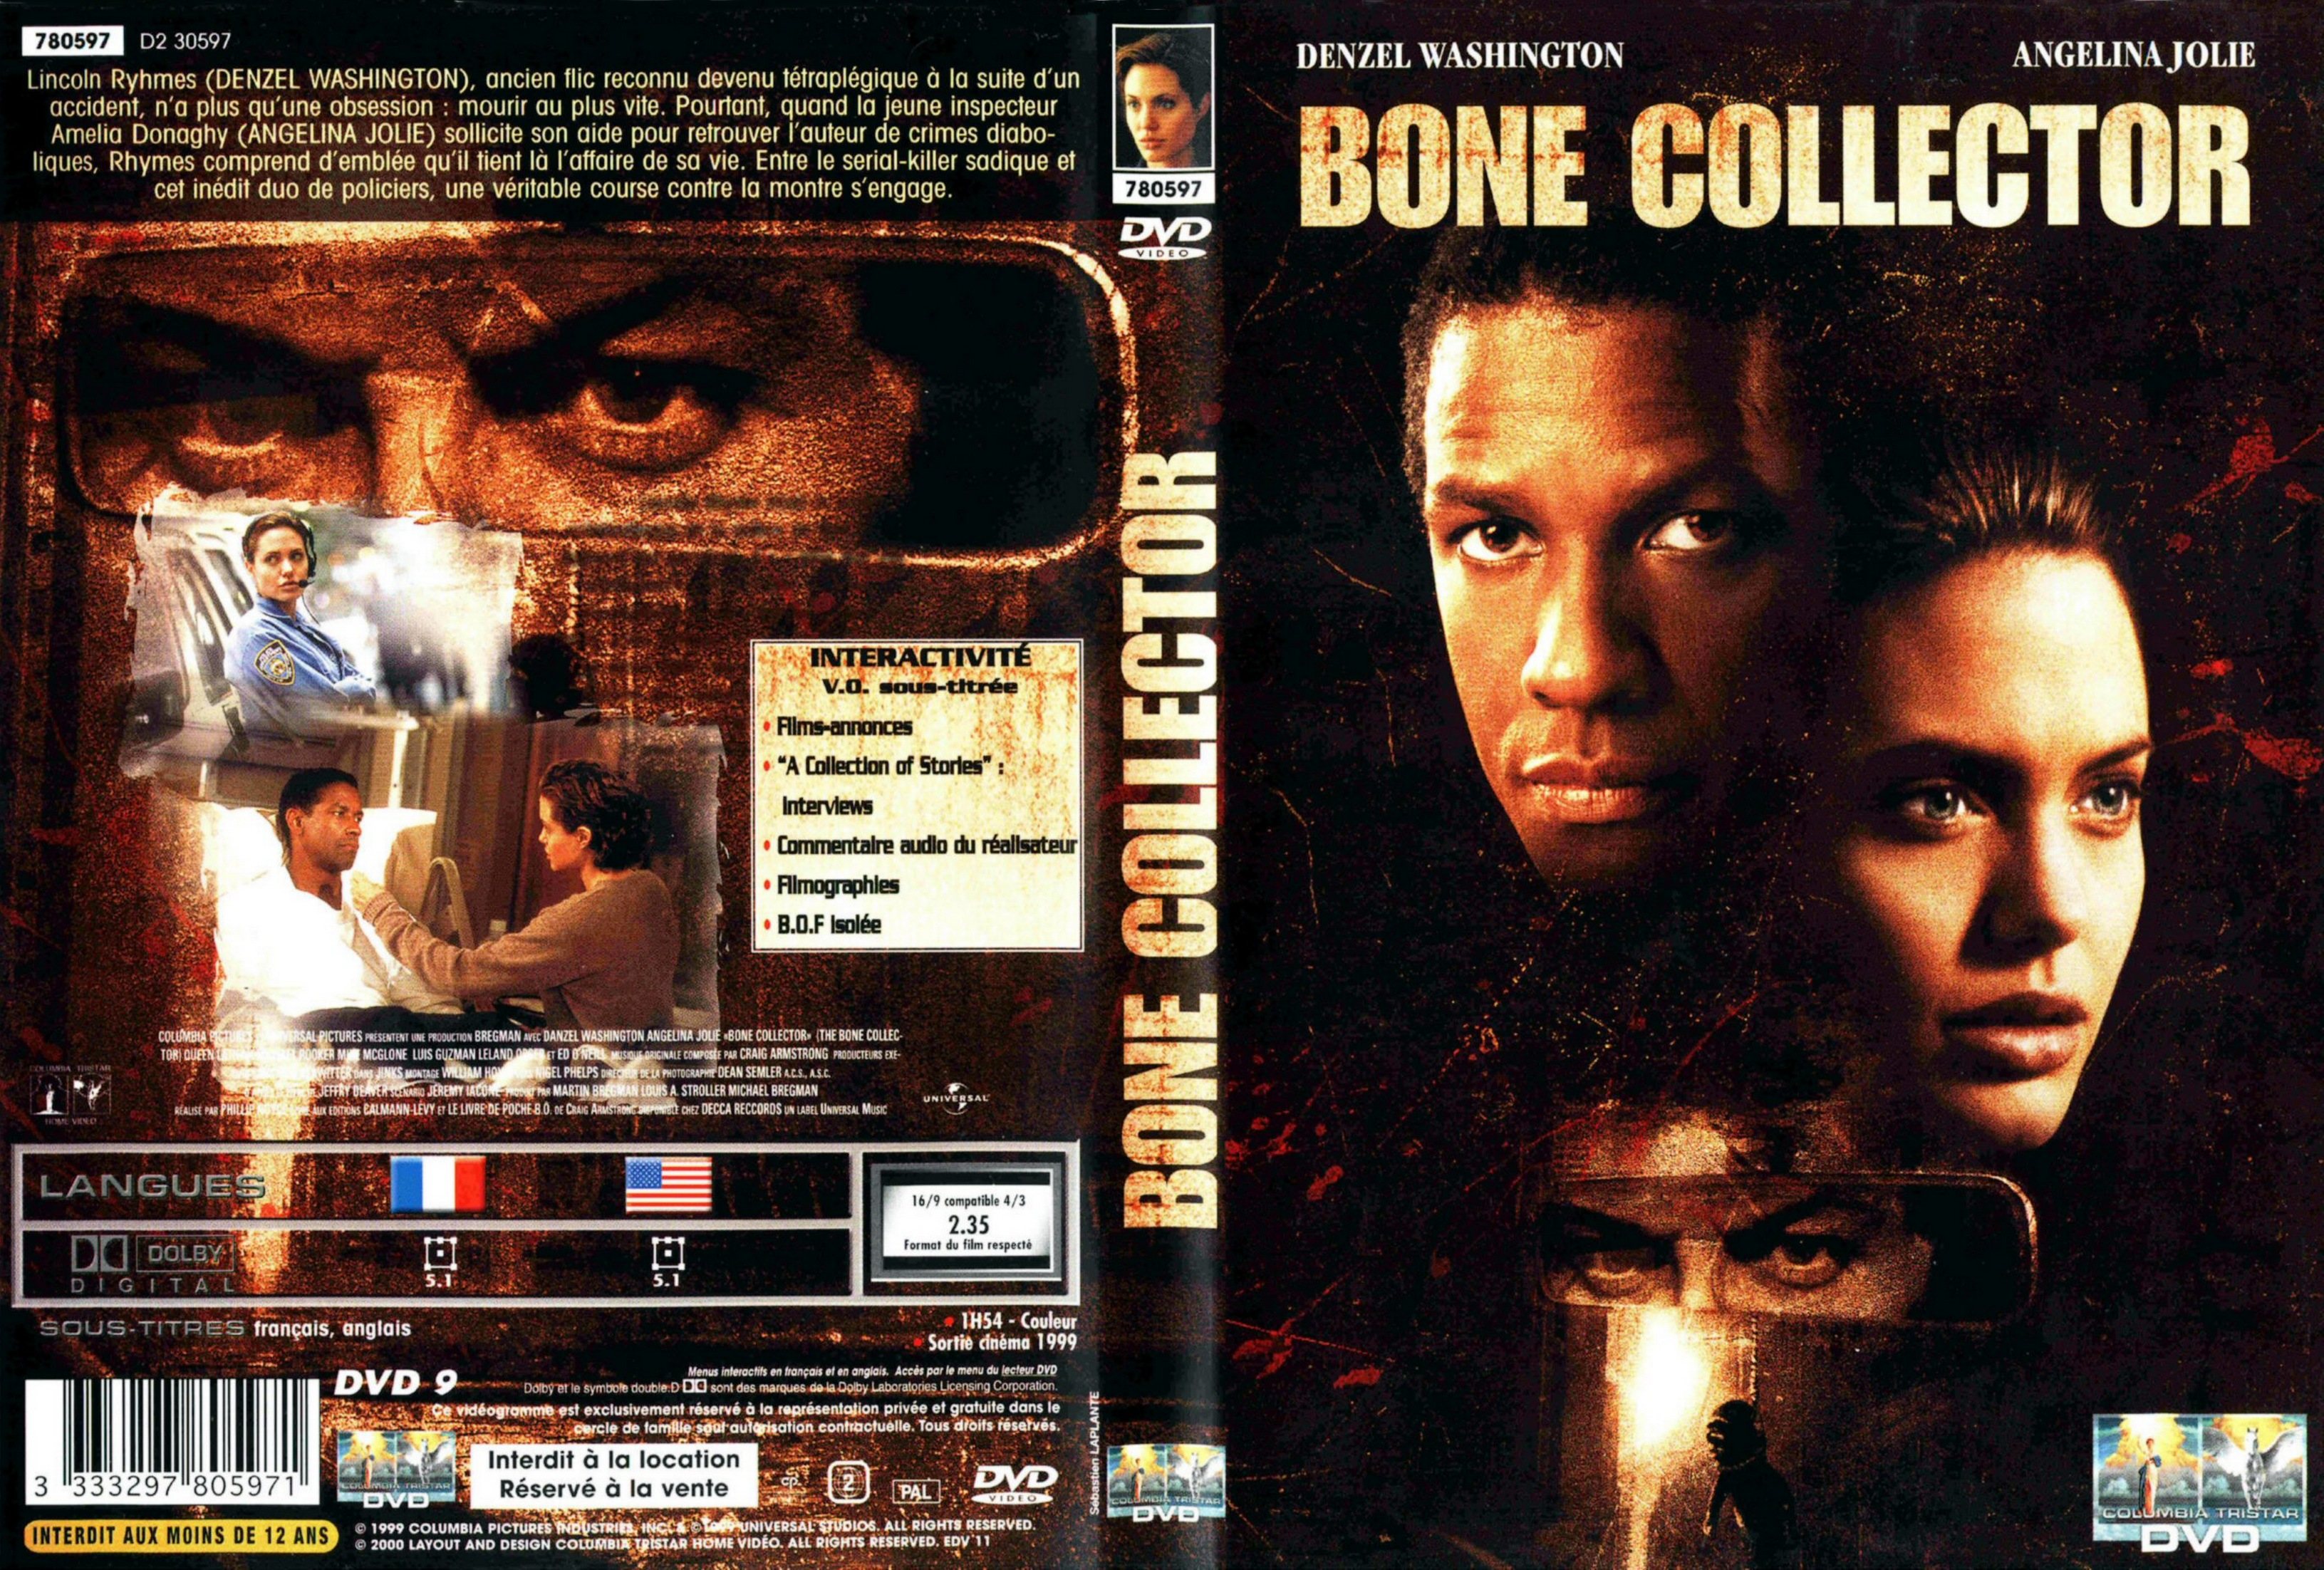 Jaquette DVD Bone Collector